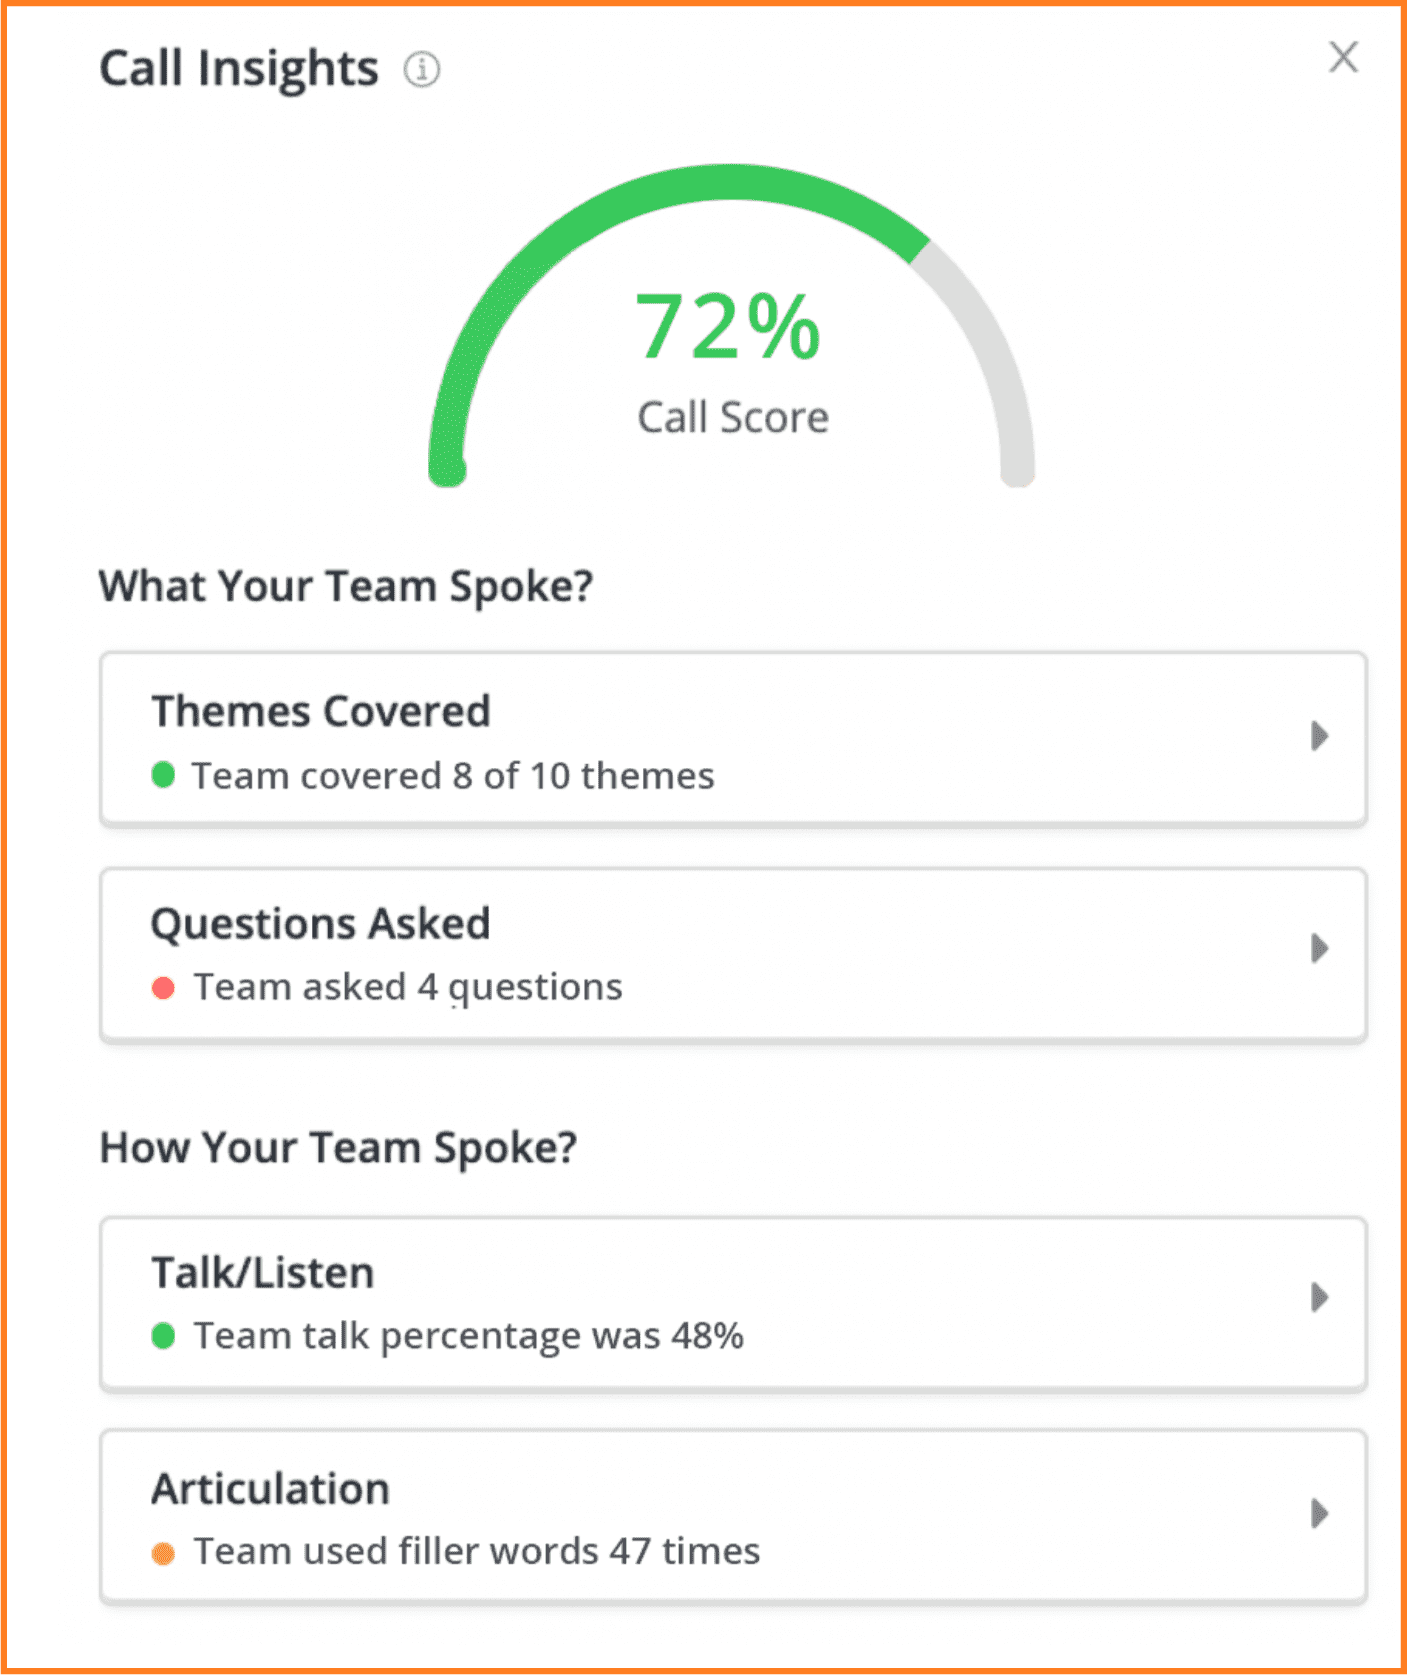 Call insights showcasing call scoring 